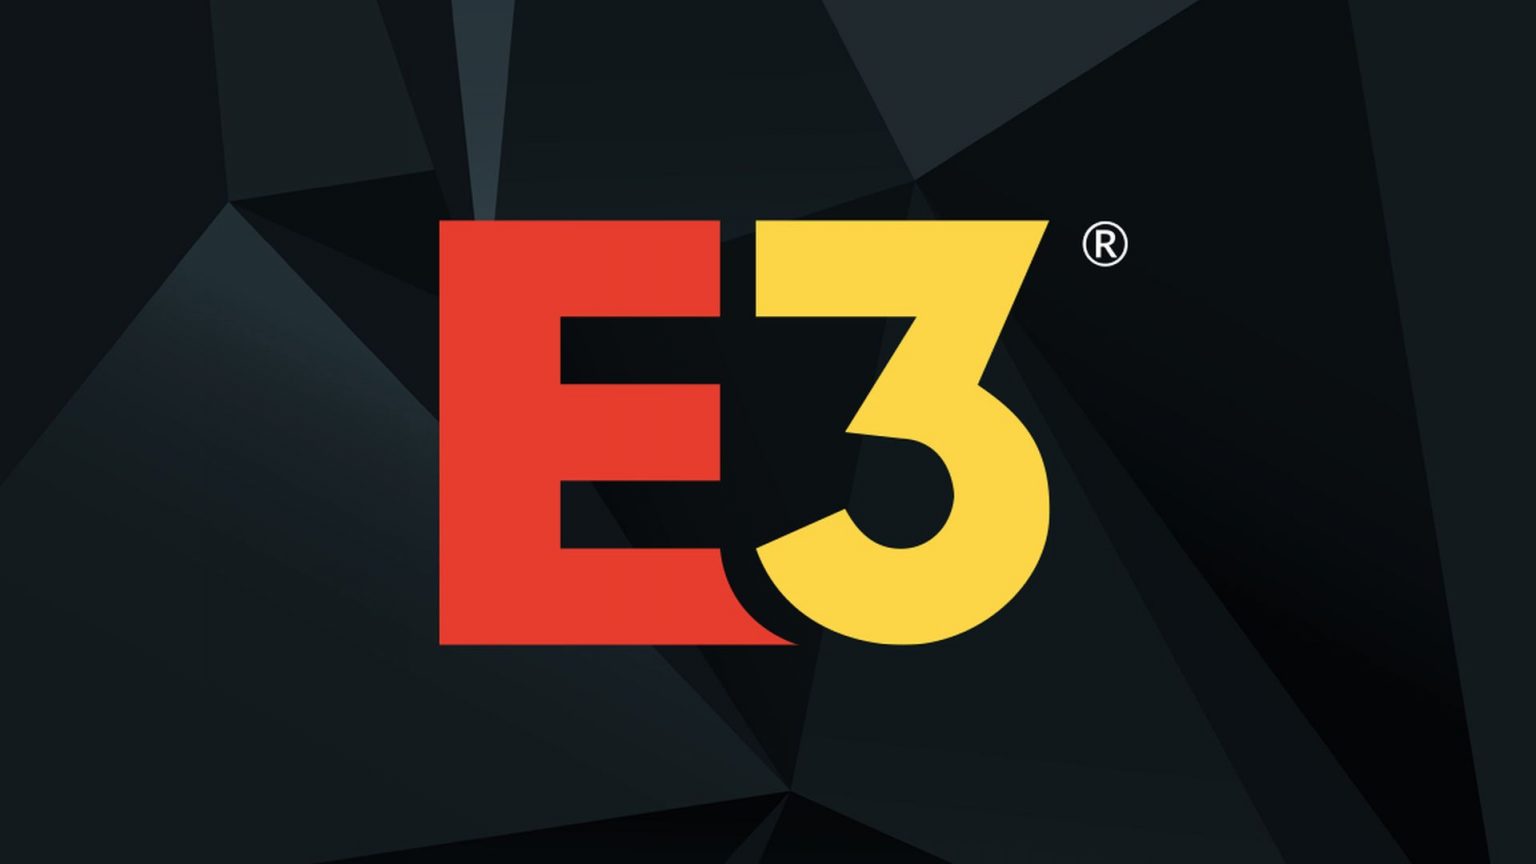 E3 2022 Digital Event Cancelled?